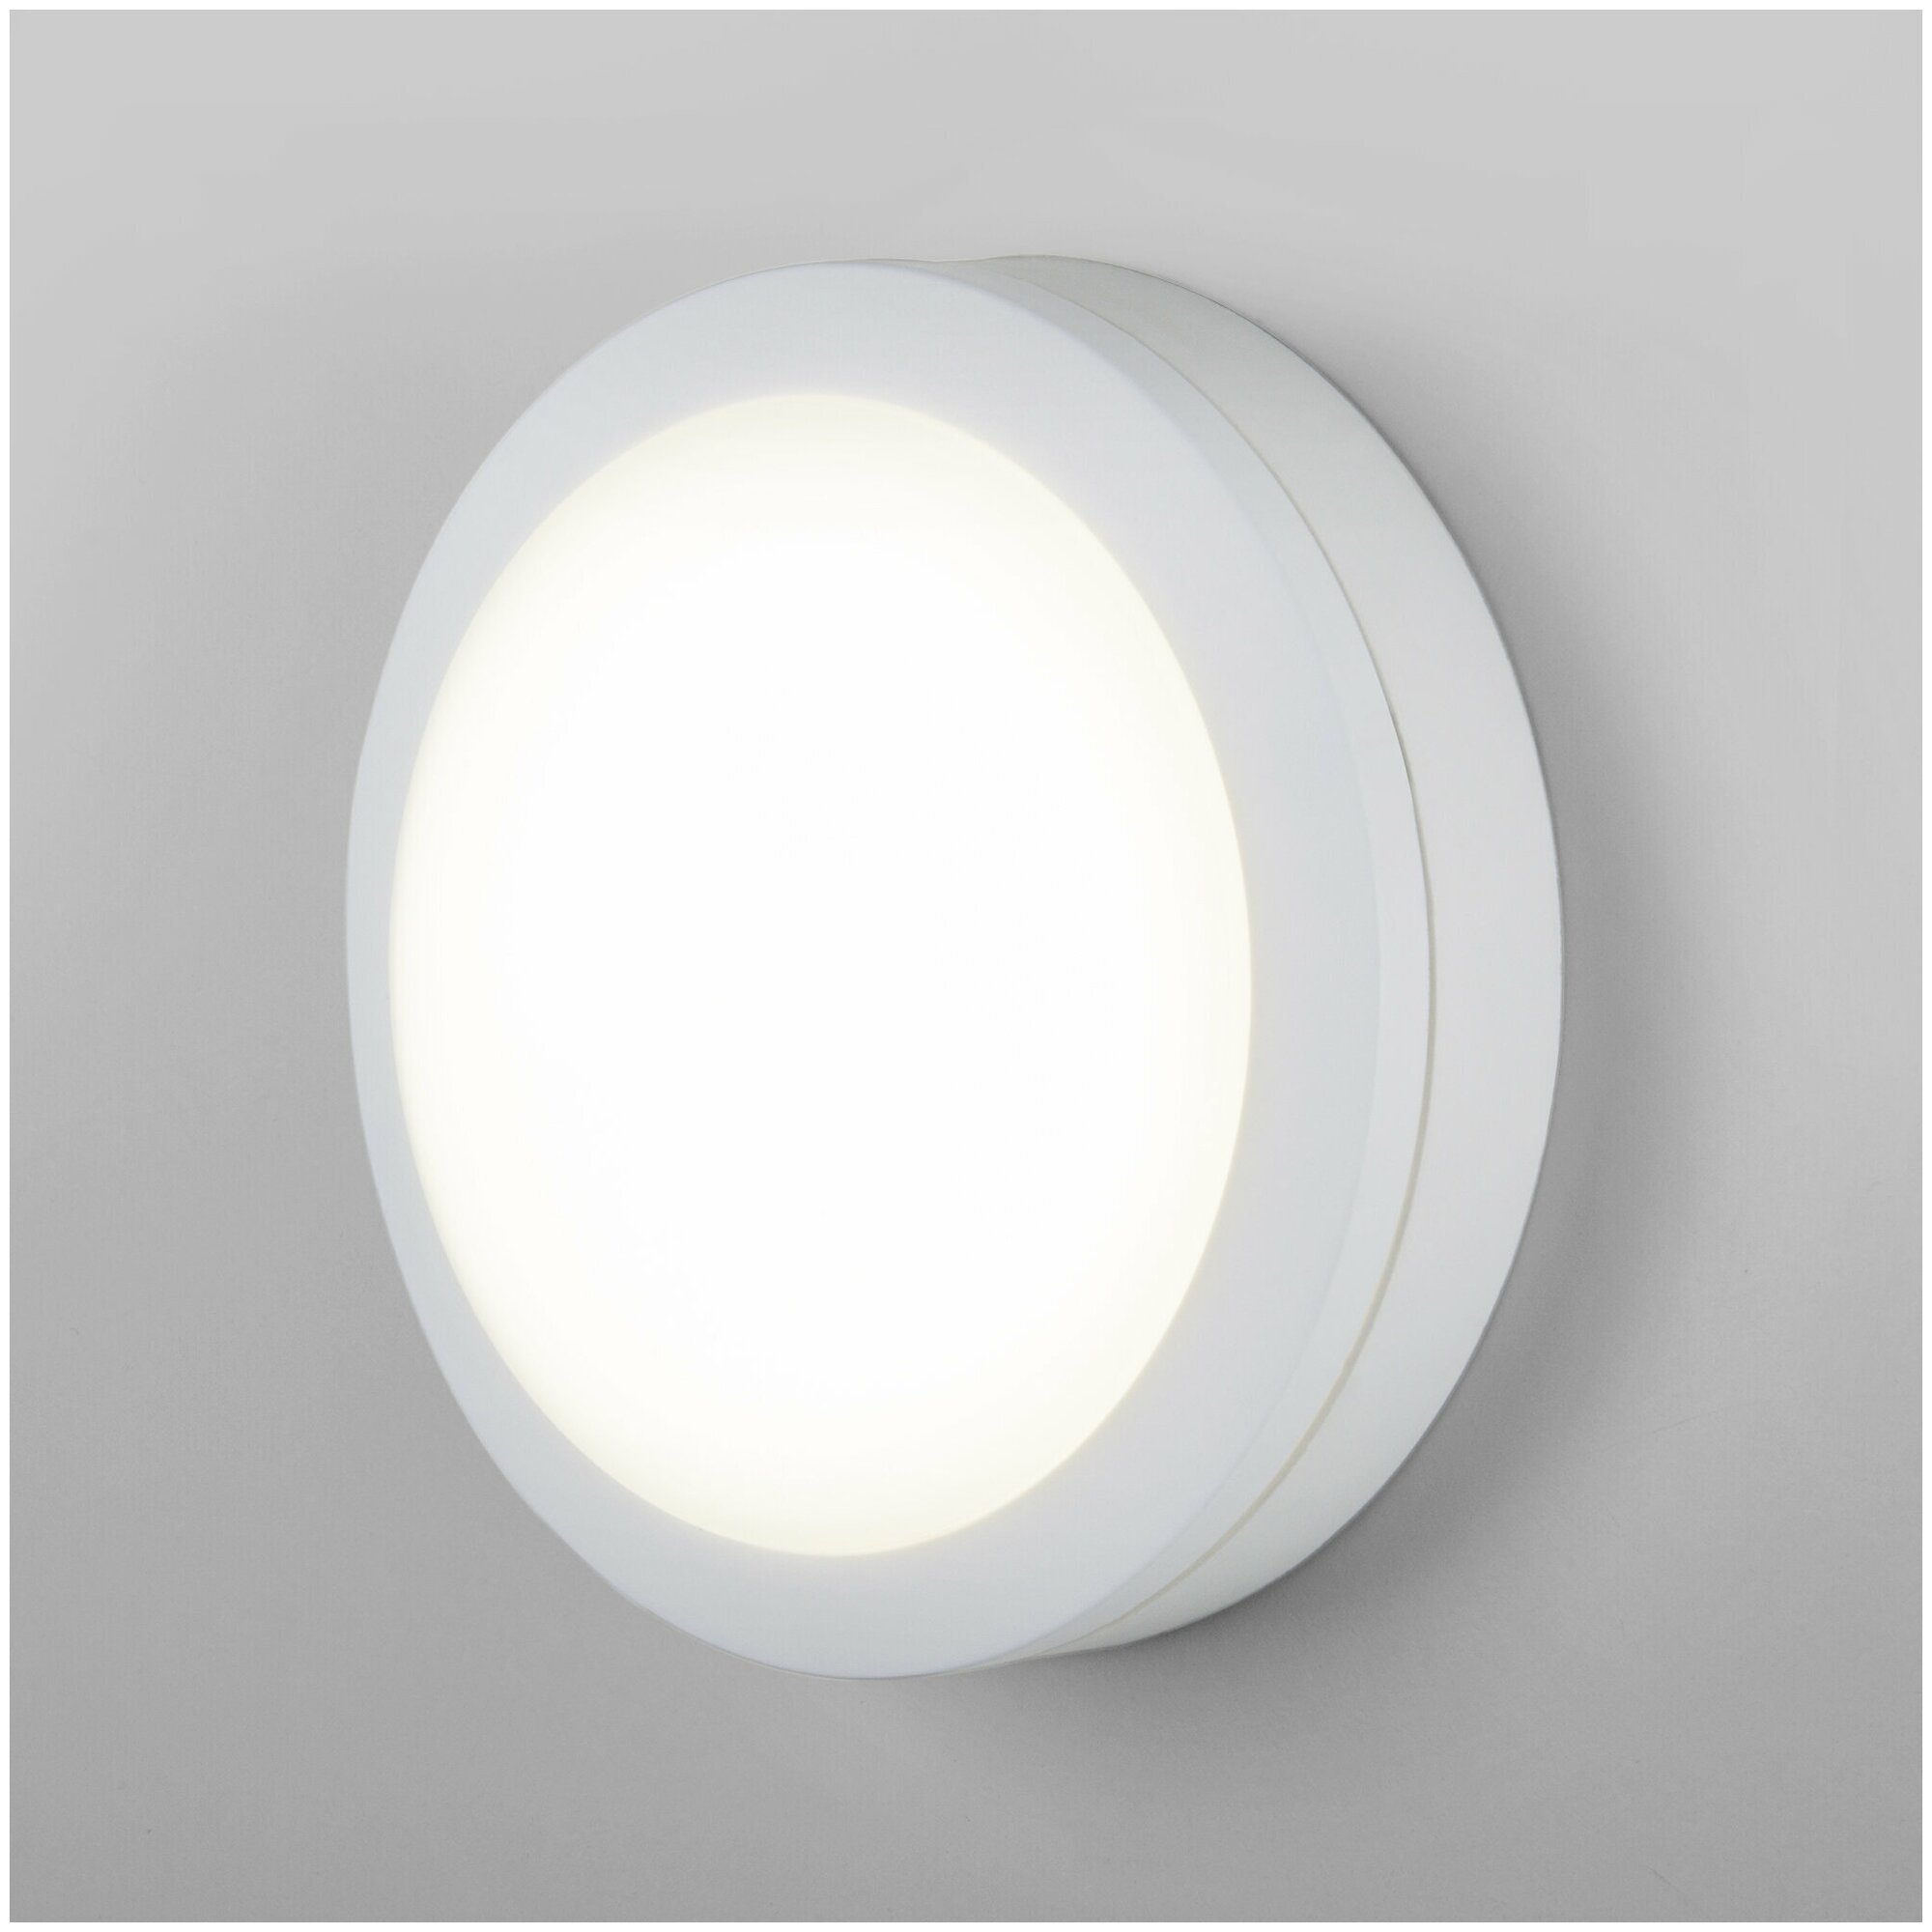 Настенно-потолочный светильник Elektrostandard Circle LTB51 LED, 15W, 4200K, цвет белый, IP65